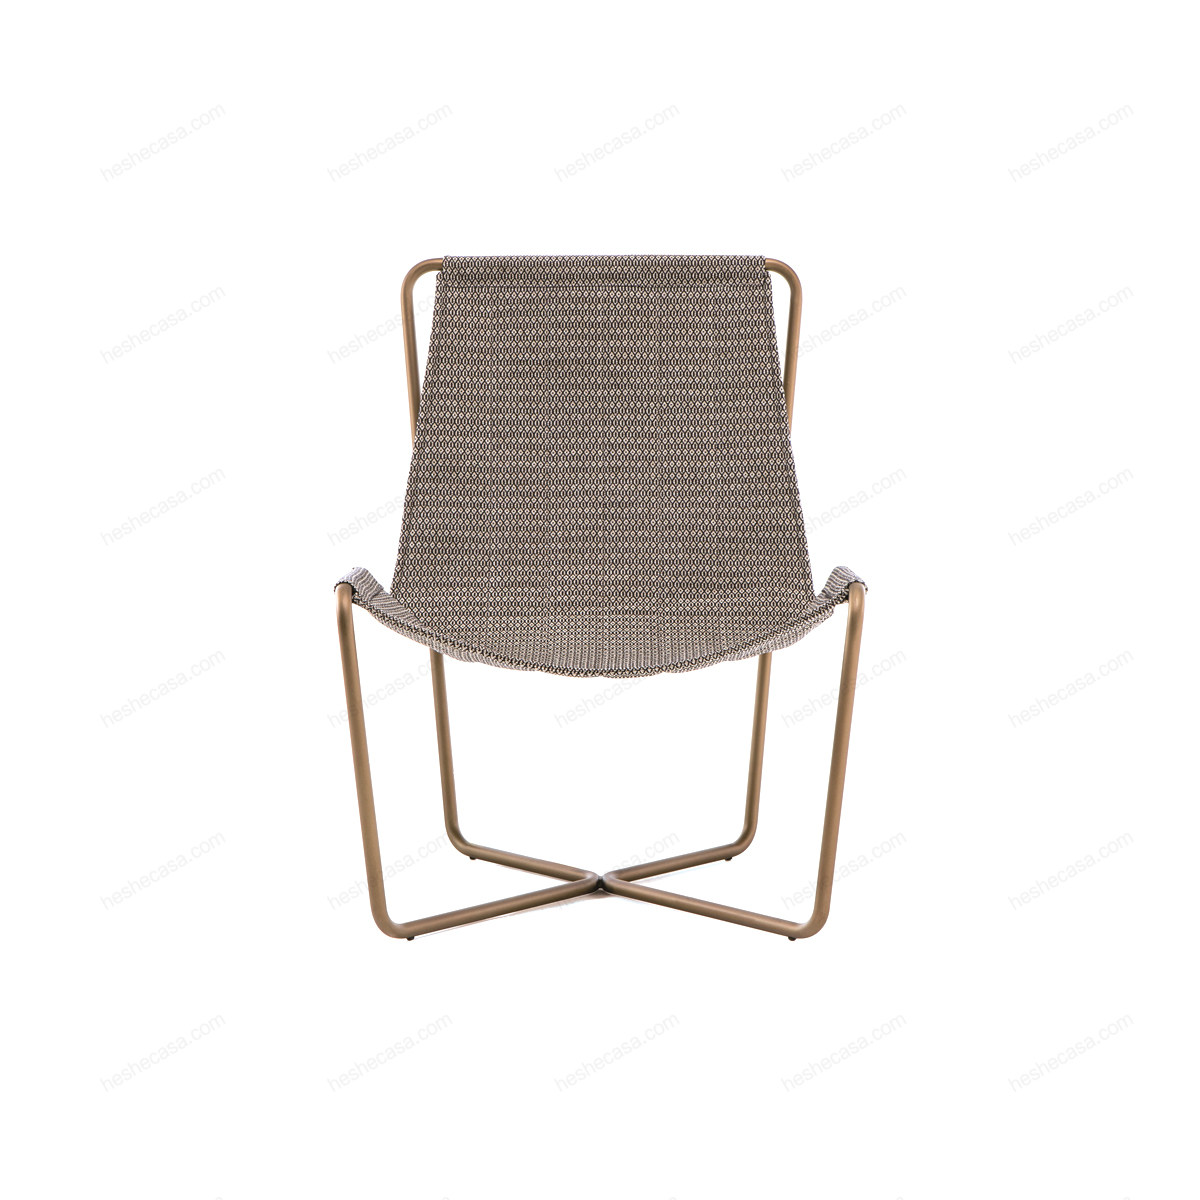 Sling Chair扶手椅